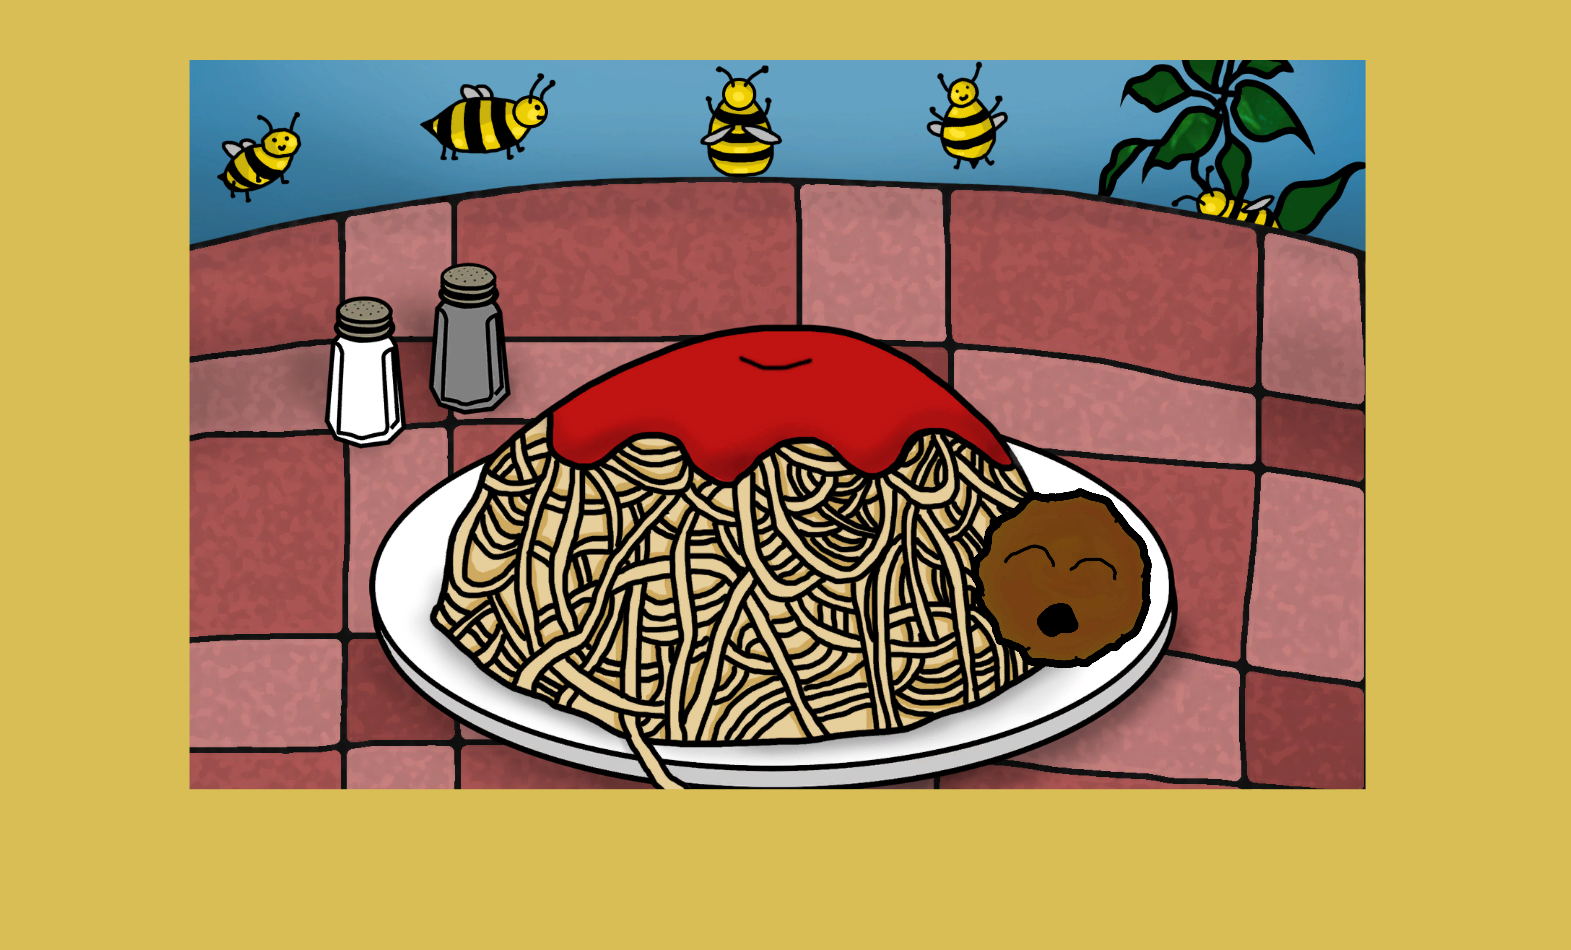 Spaghetti Time